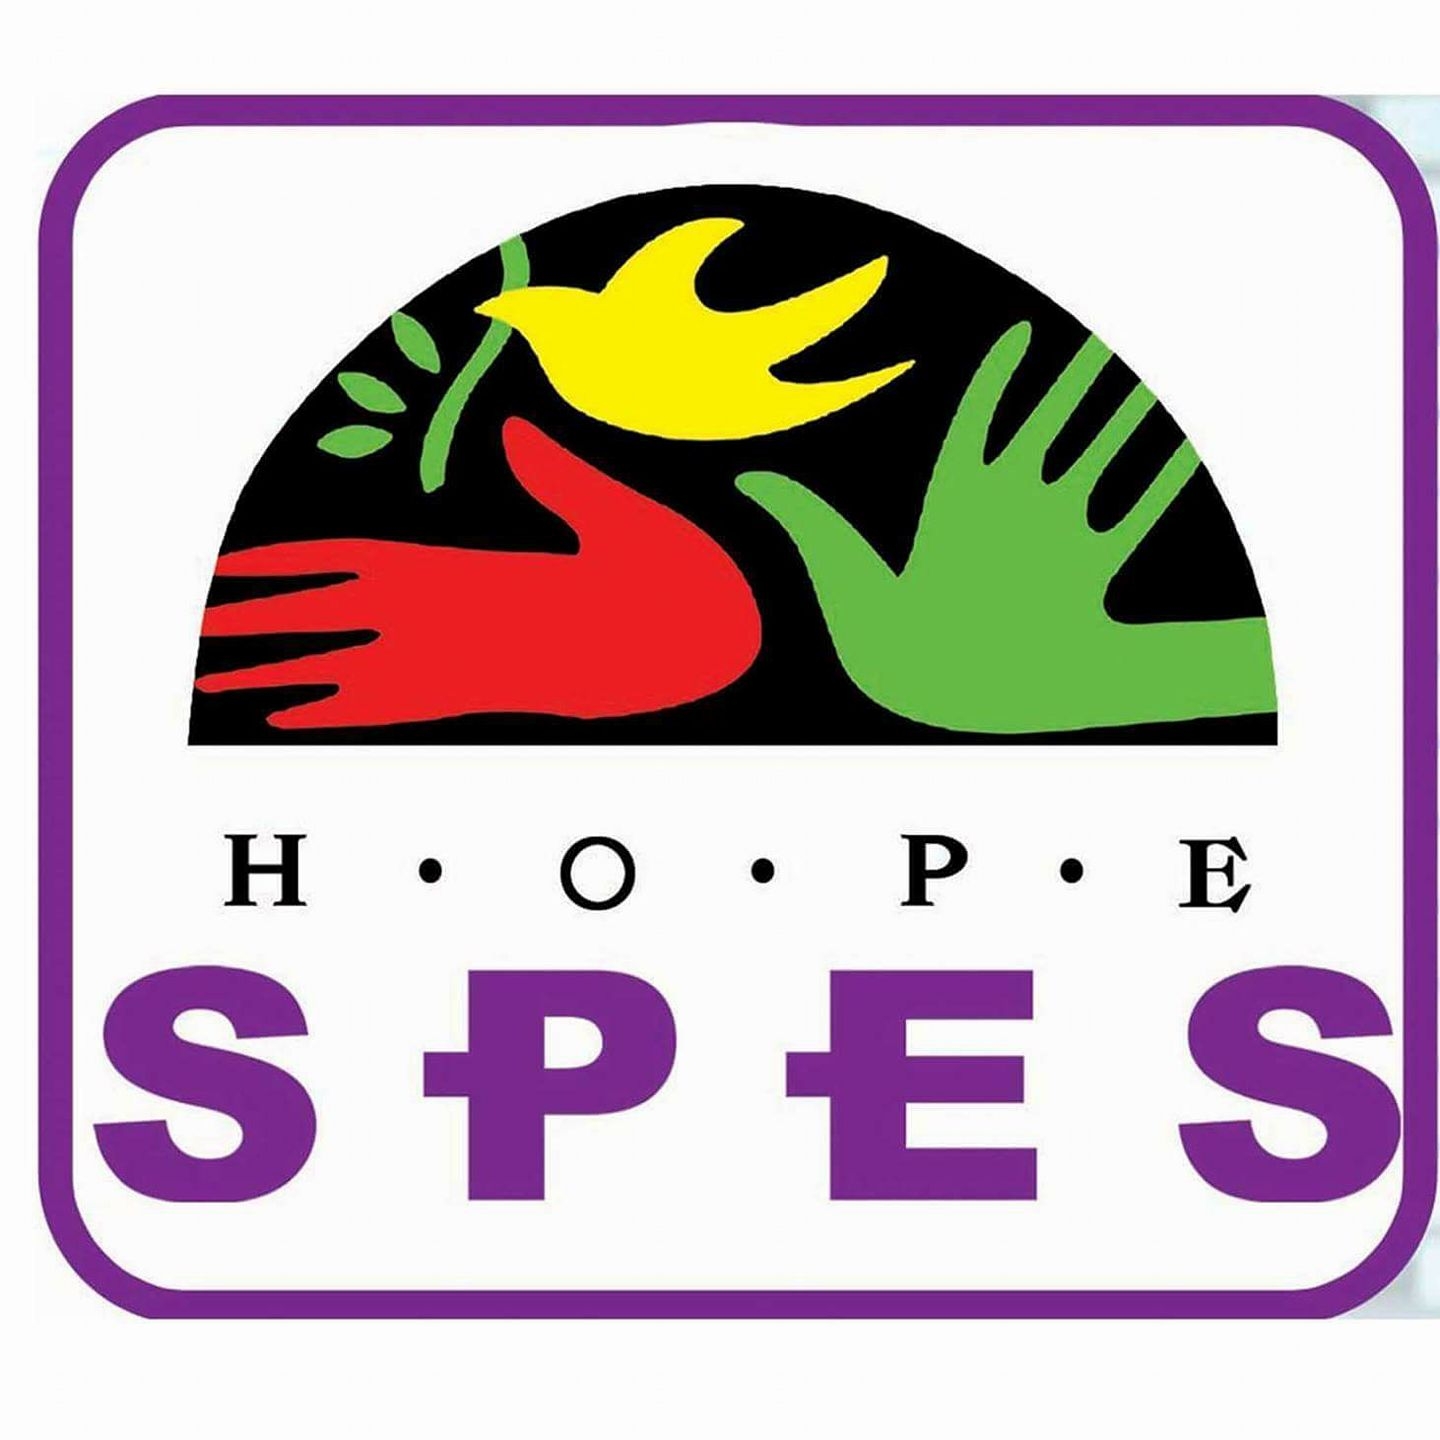 SPES Children Hospital|Hospitals|Medical Services